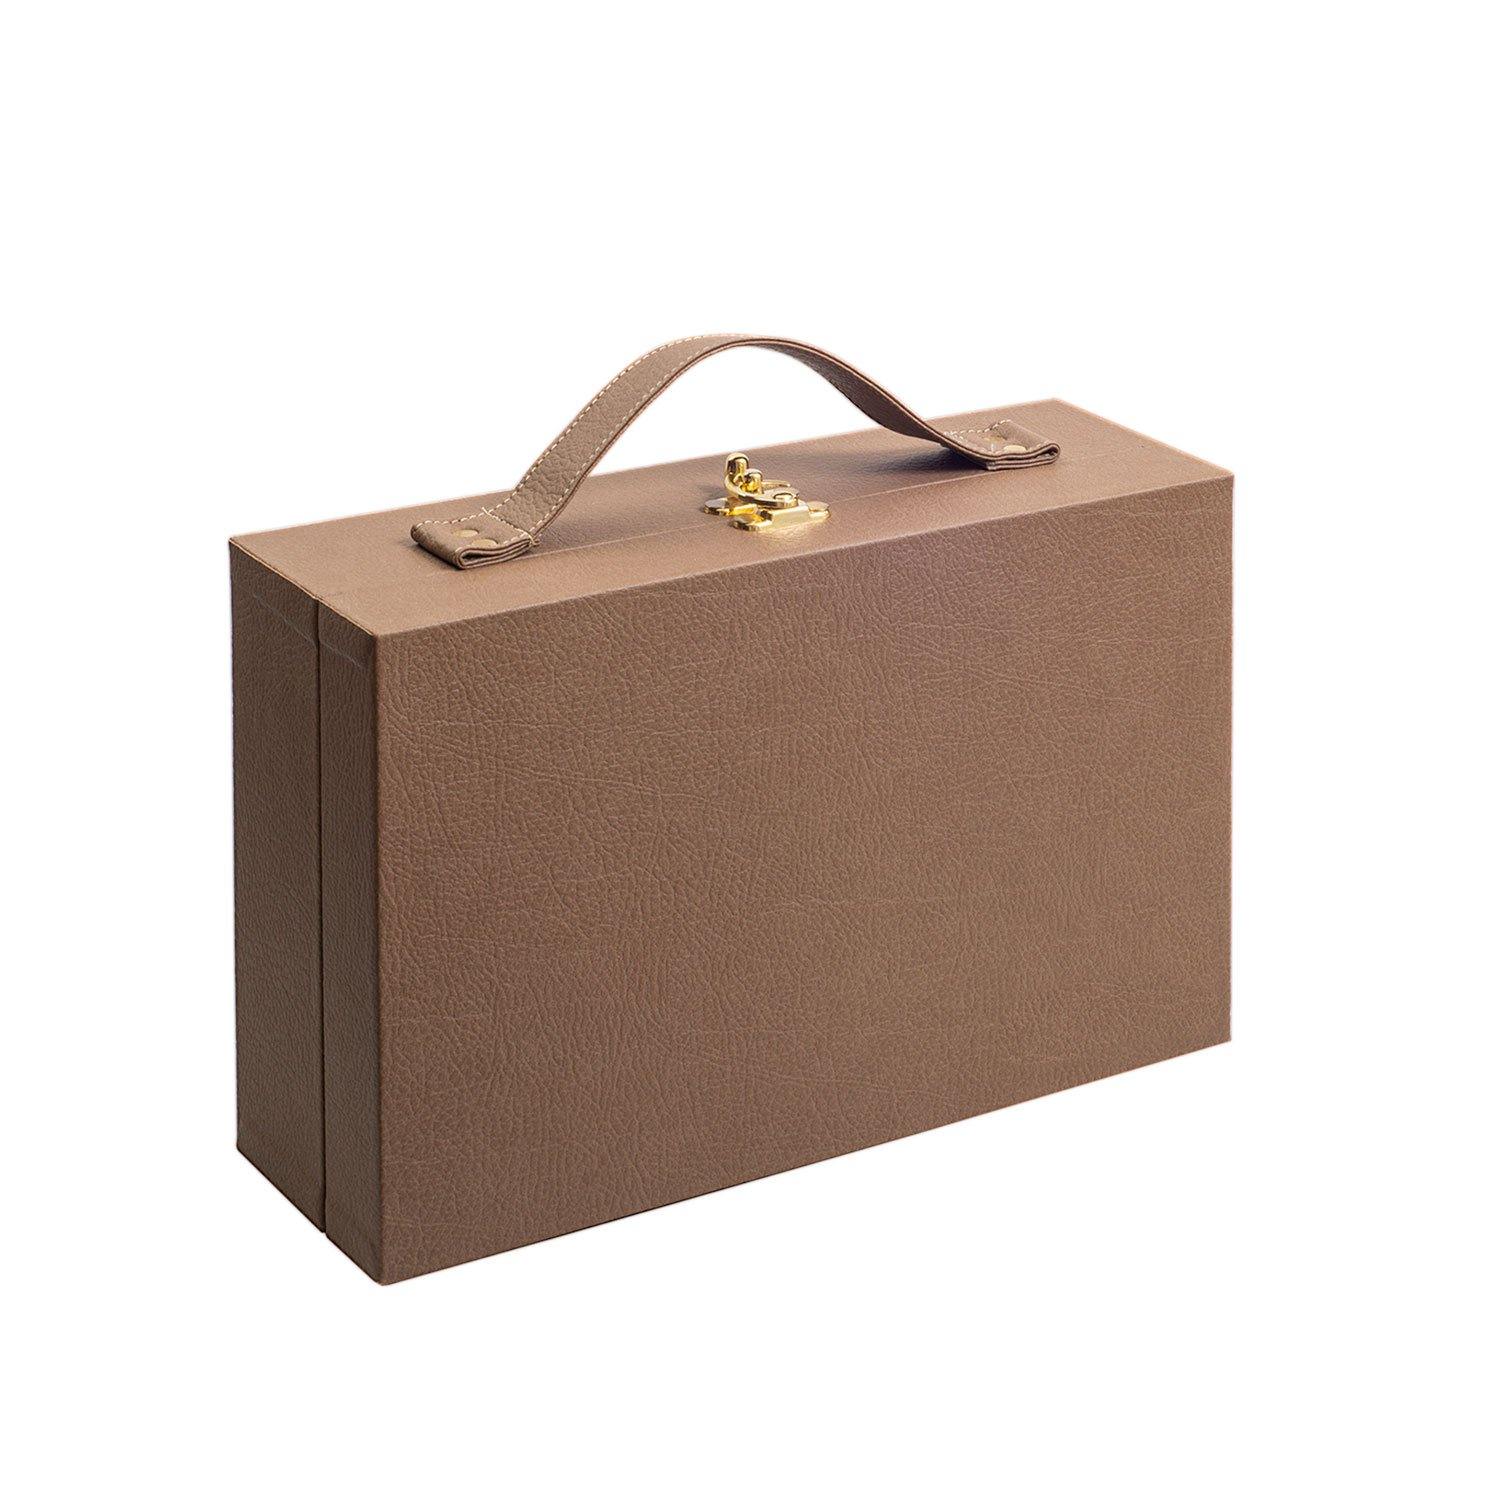 MED TREASURE BOX - Treasure Box para mujer - Pajarolimon Colombia